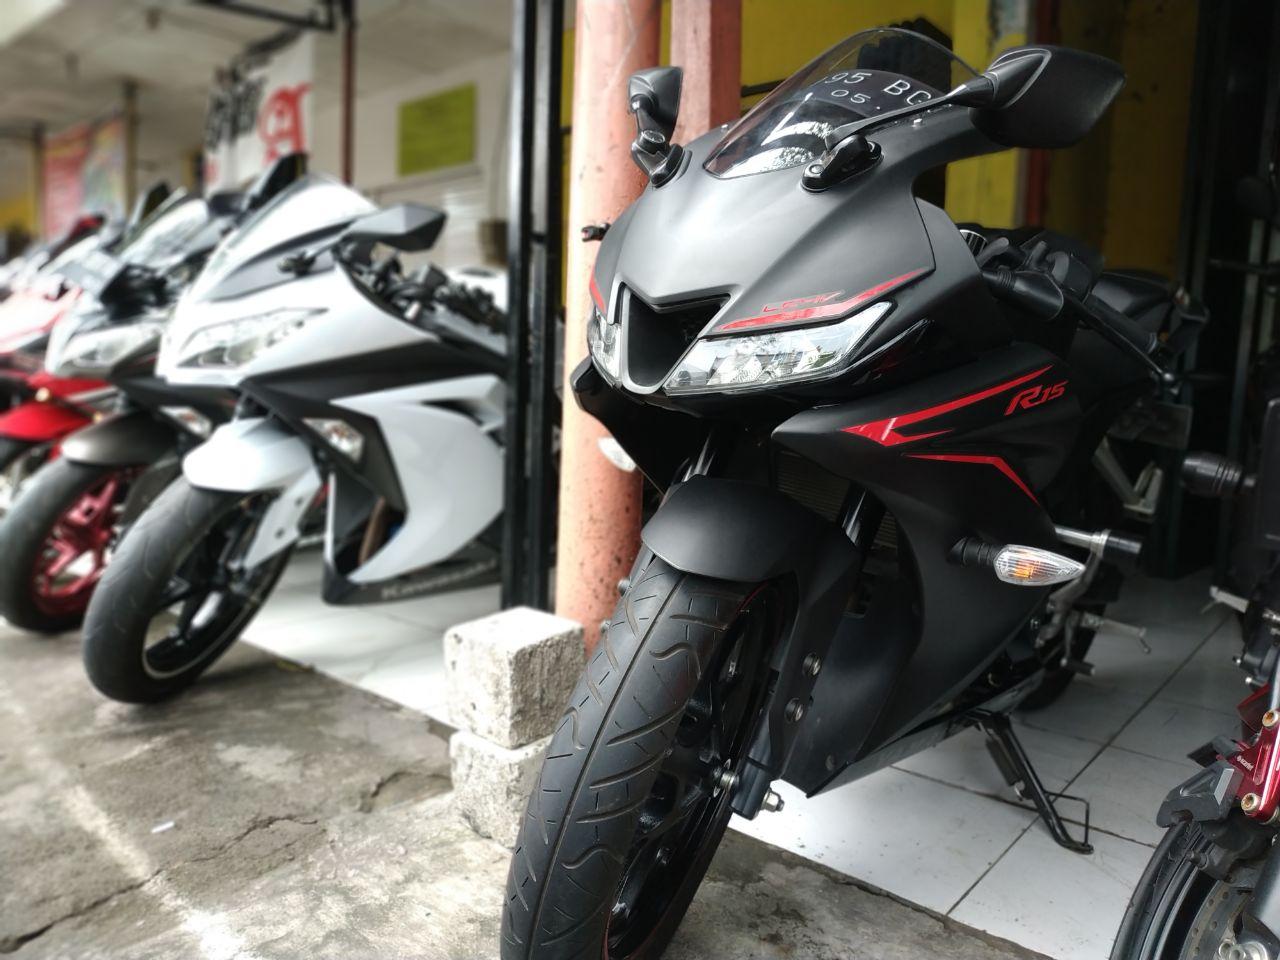 Harga Motor Bekas Yamaha R15 V3 Di Semarang Versi Inuk Otovlog Inukotovlog Com